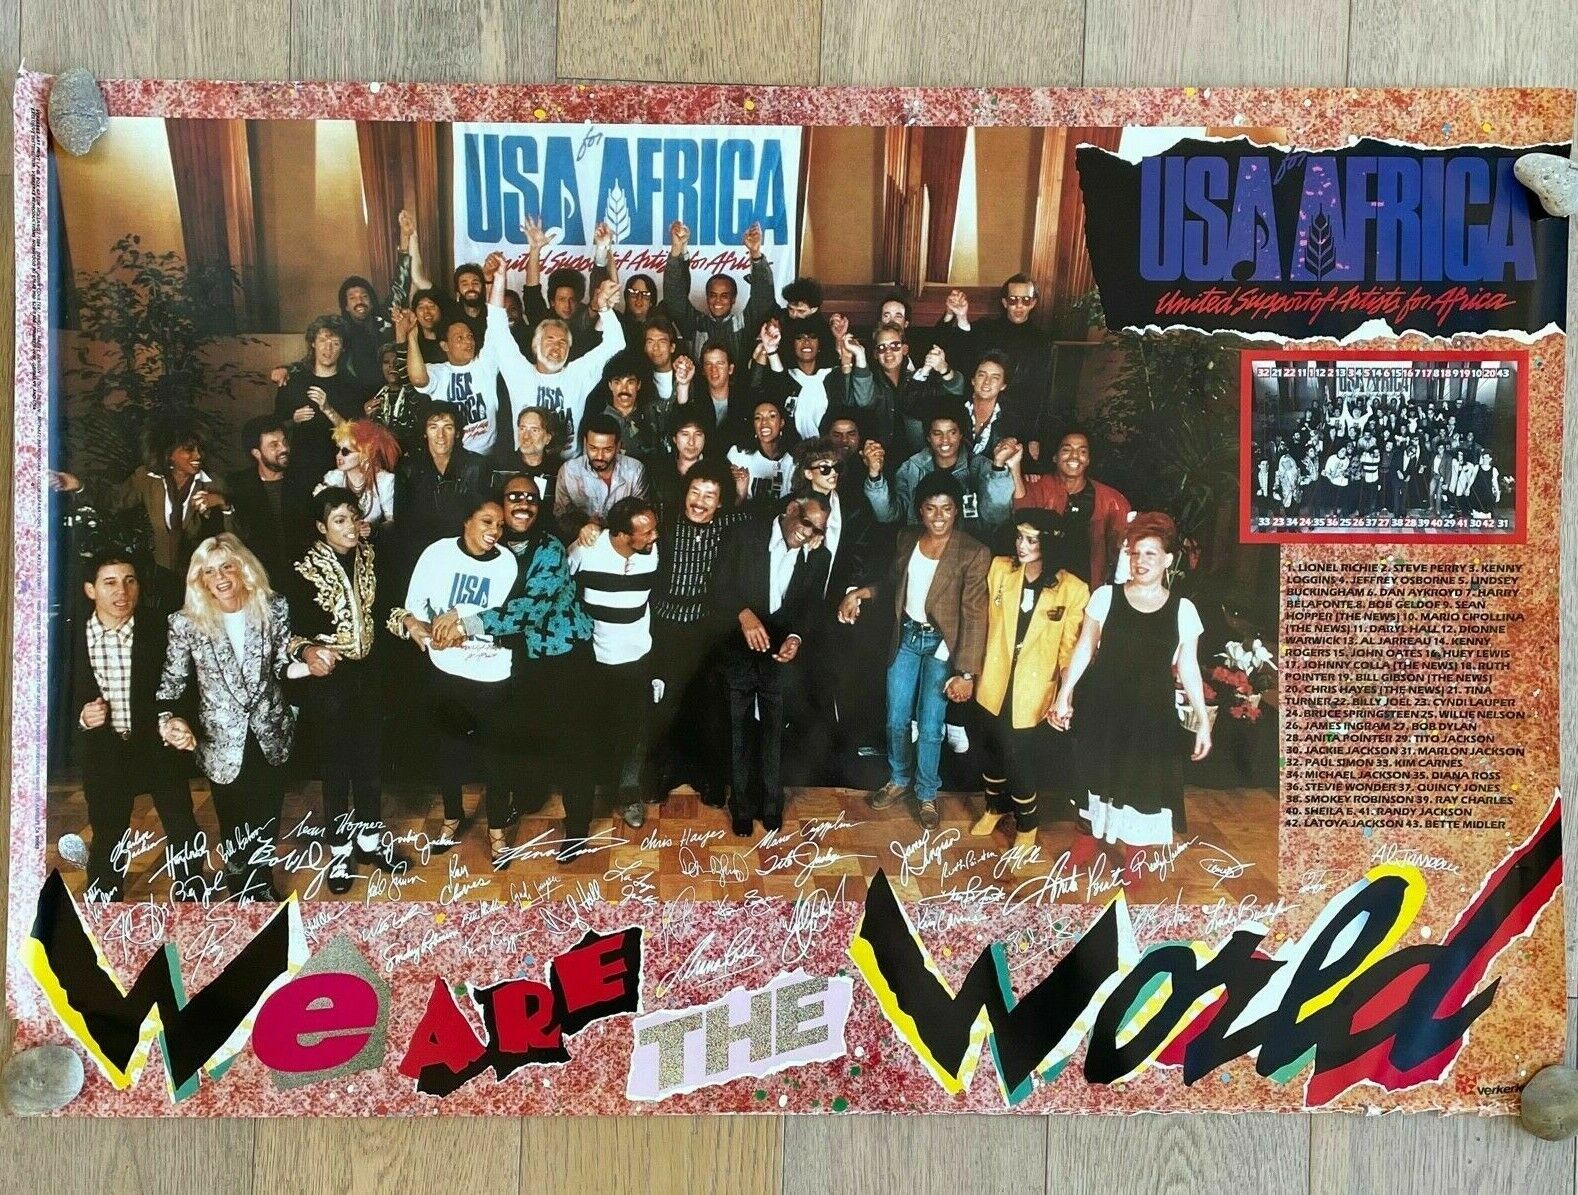 VINTAGE 1985 MICHEAL JACKSON “WE ARE THE WORLD” Verkerke Poster MINT IN PLASTIC